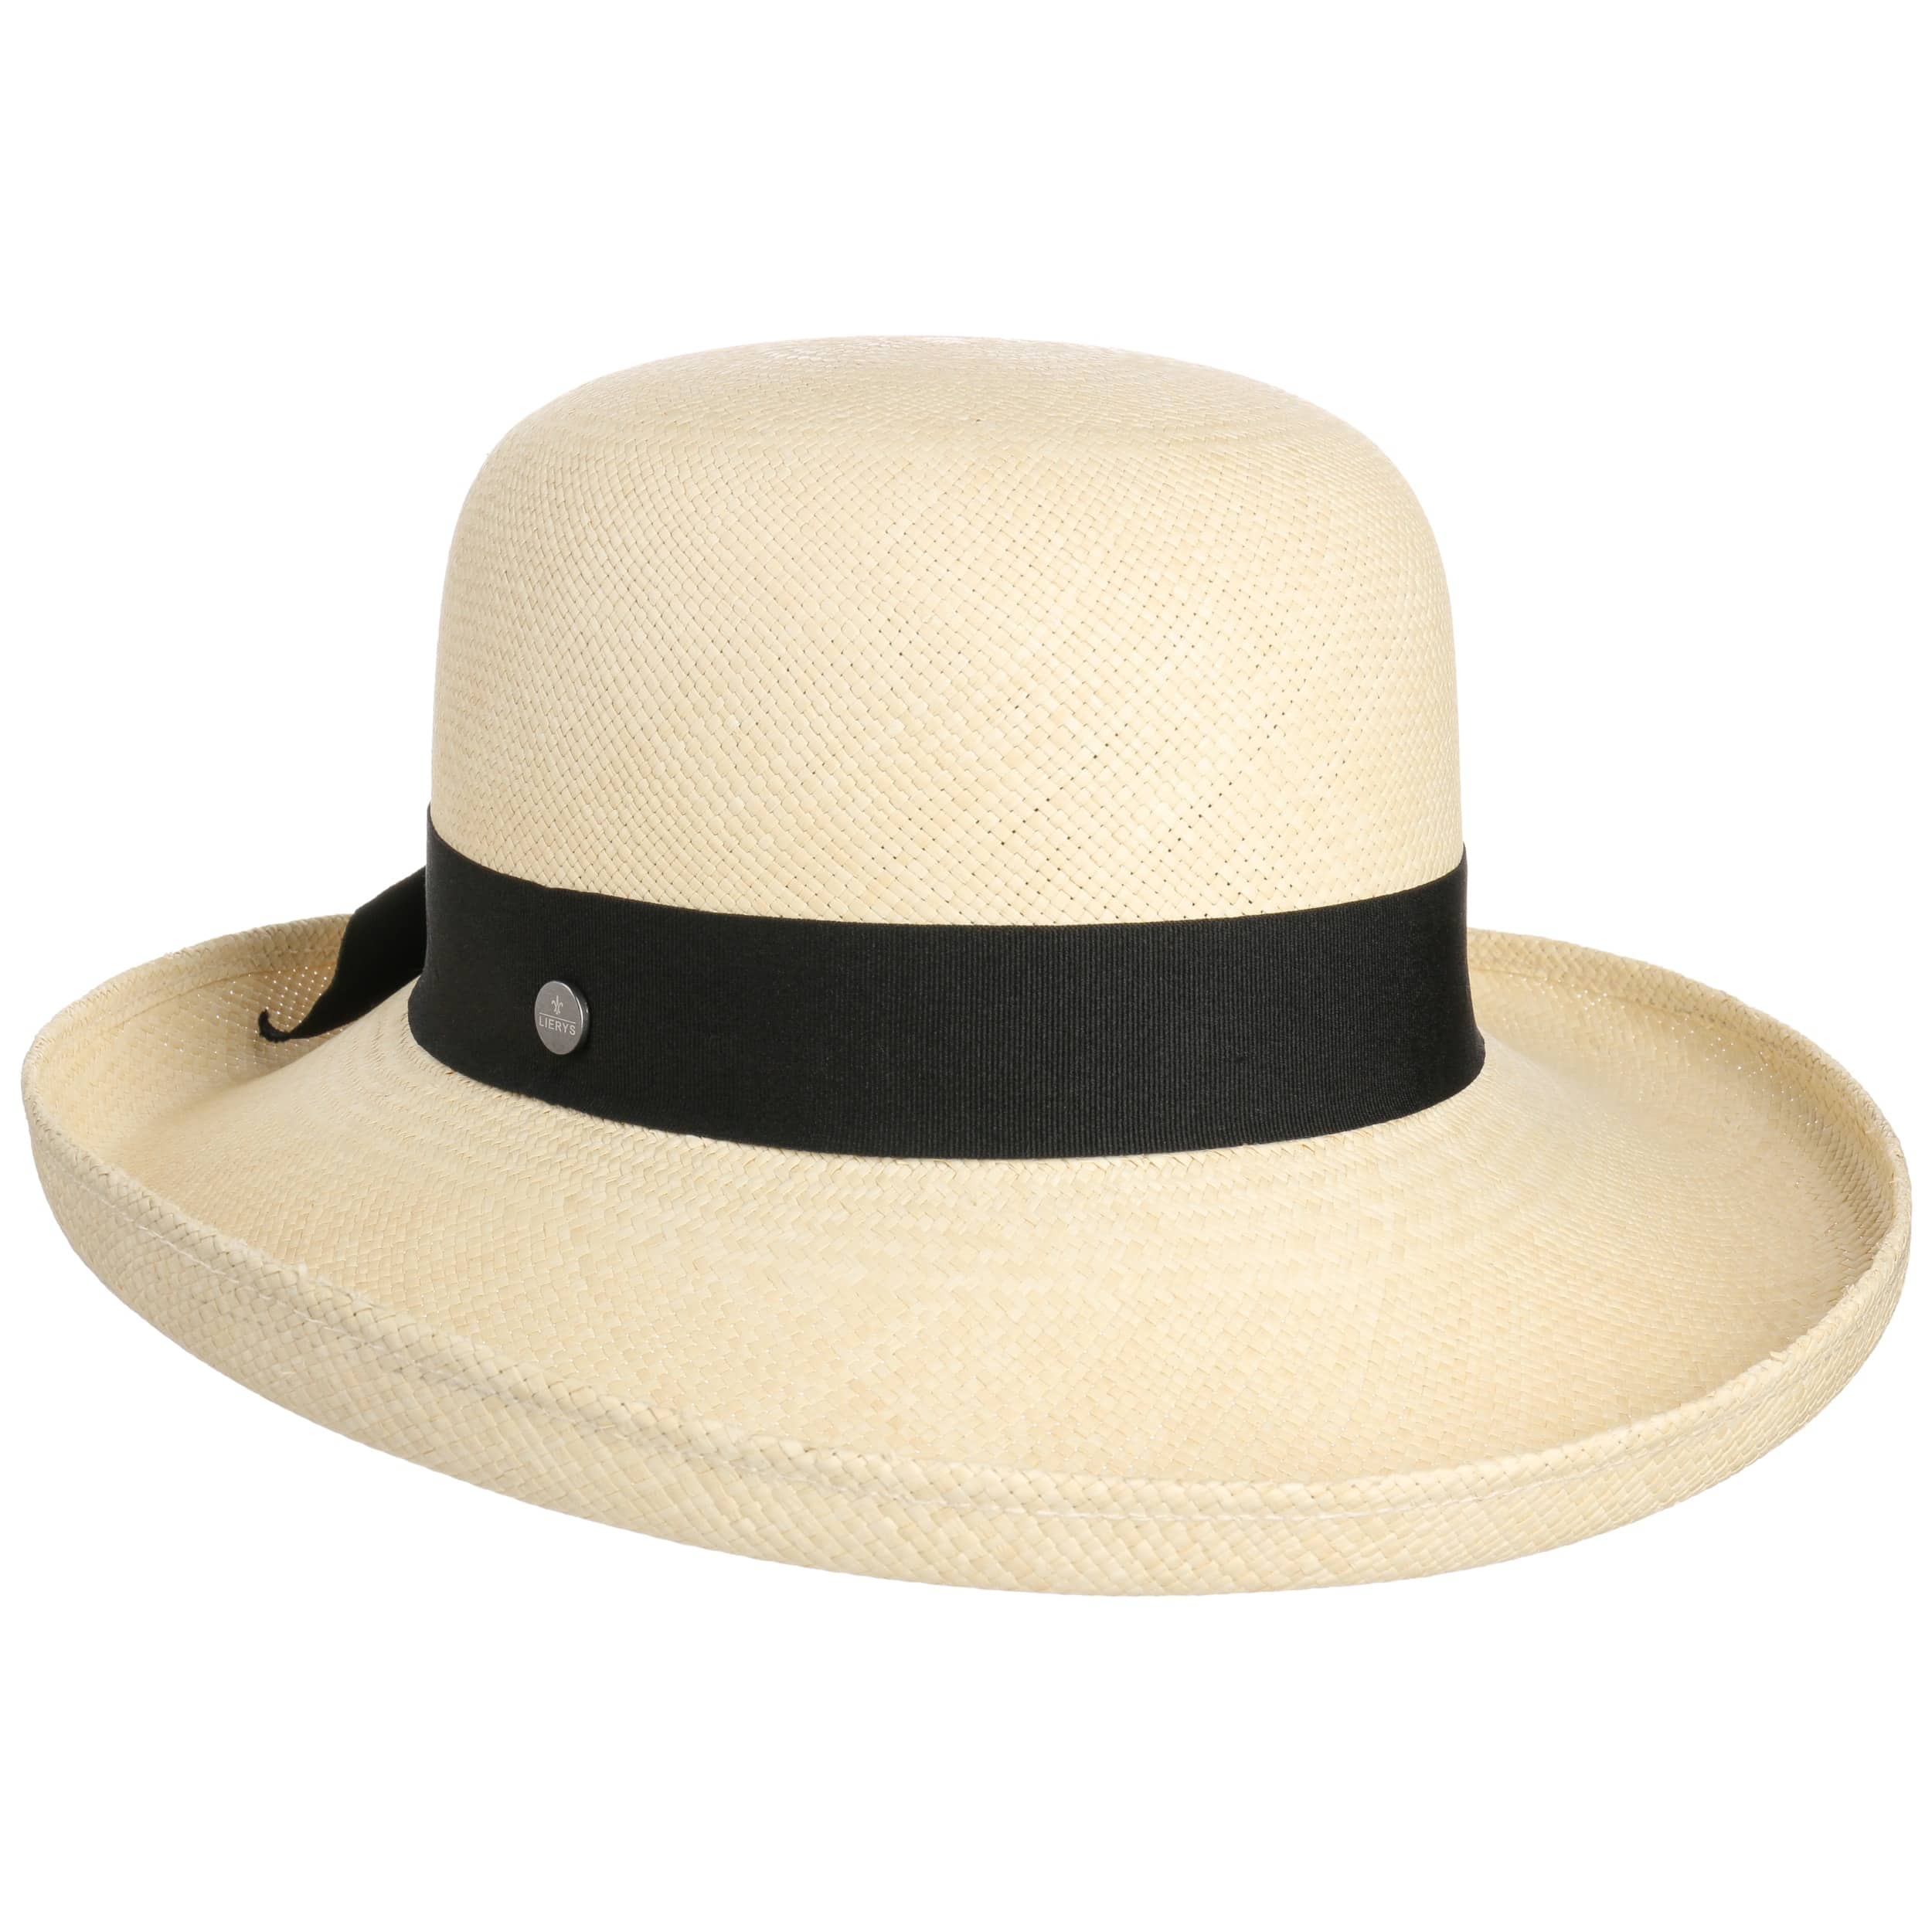 Pasadena Panama Upward Brimmed Hat by Lierys - 155,95